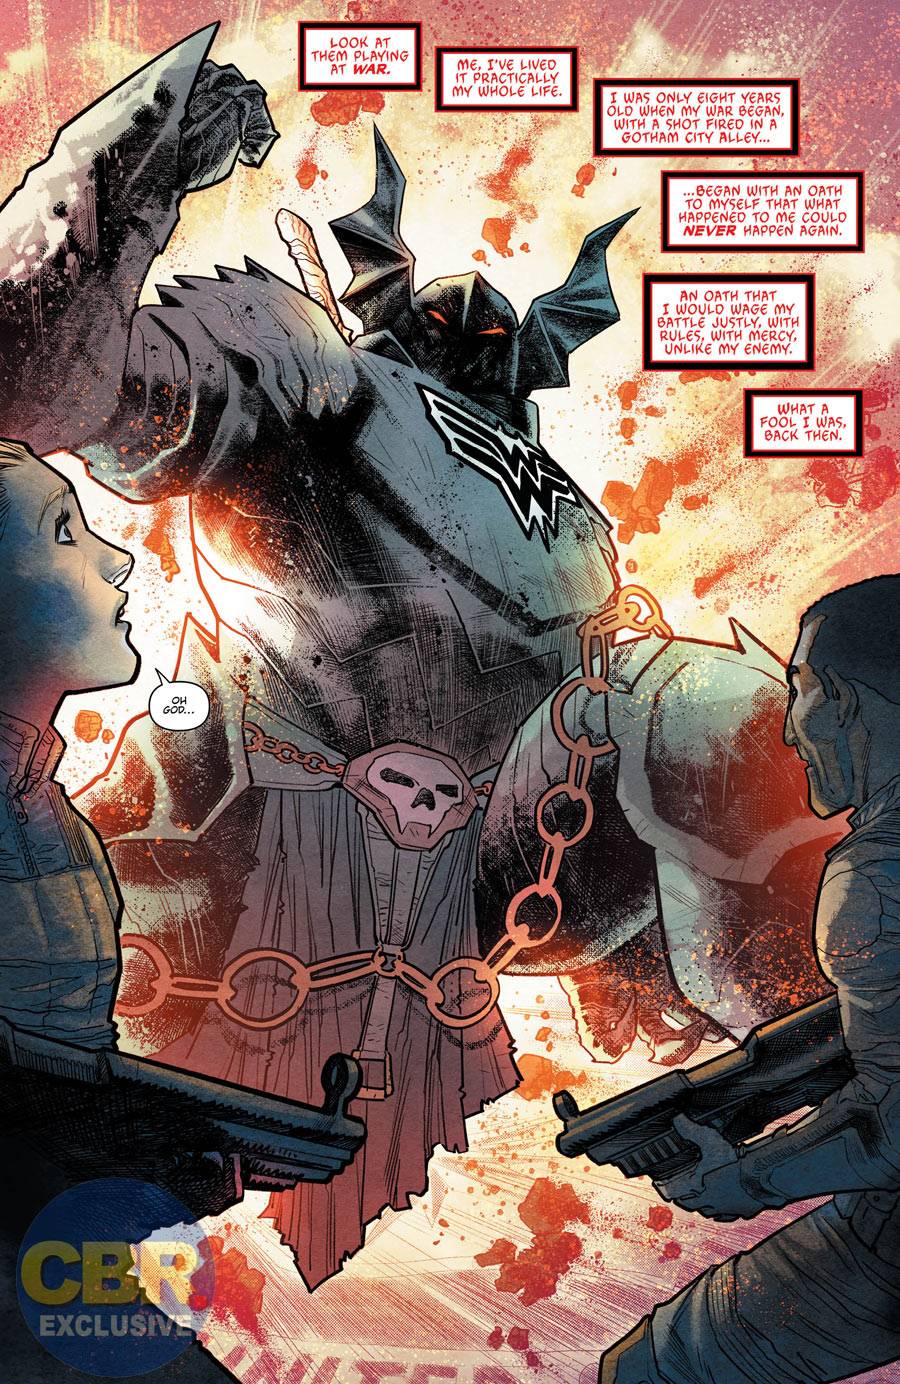 DC DARK KNIGHTS BATMAN THE MERCILESS METAL TIE-IN #1 COMIC BOOK